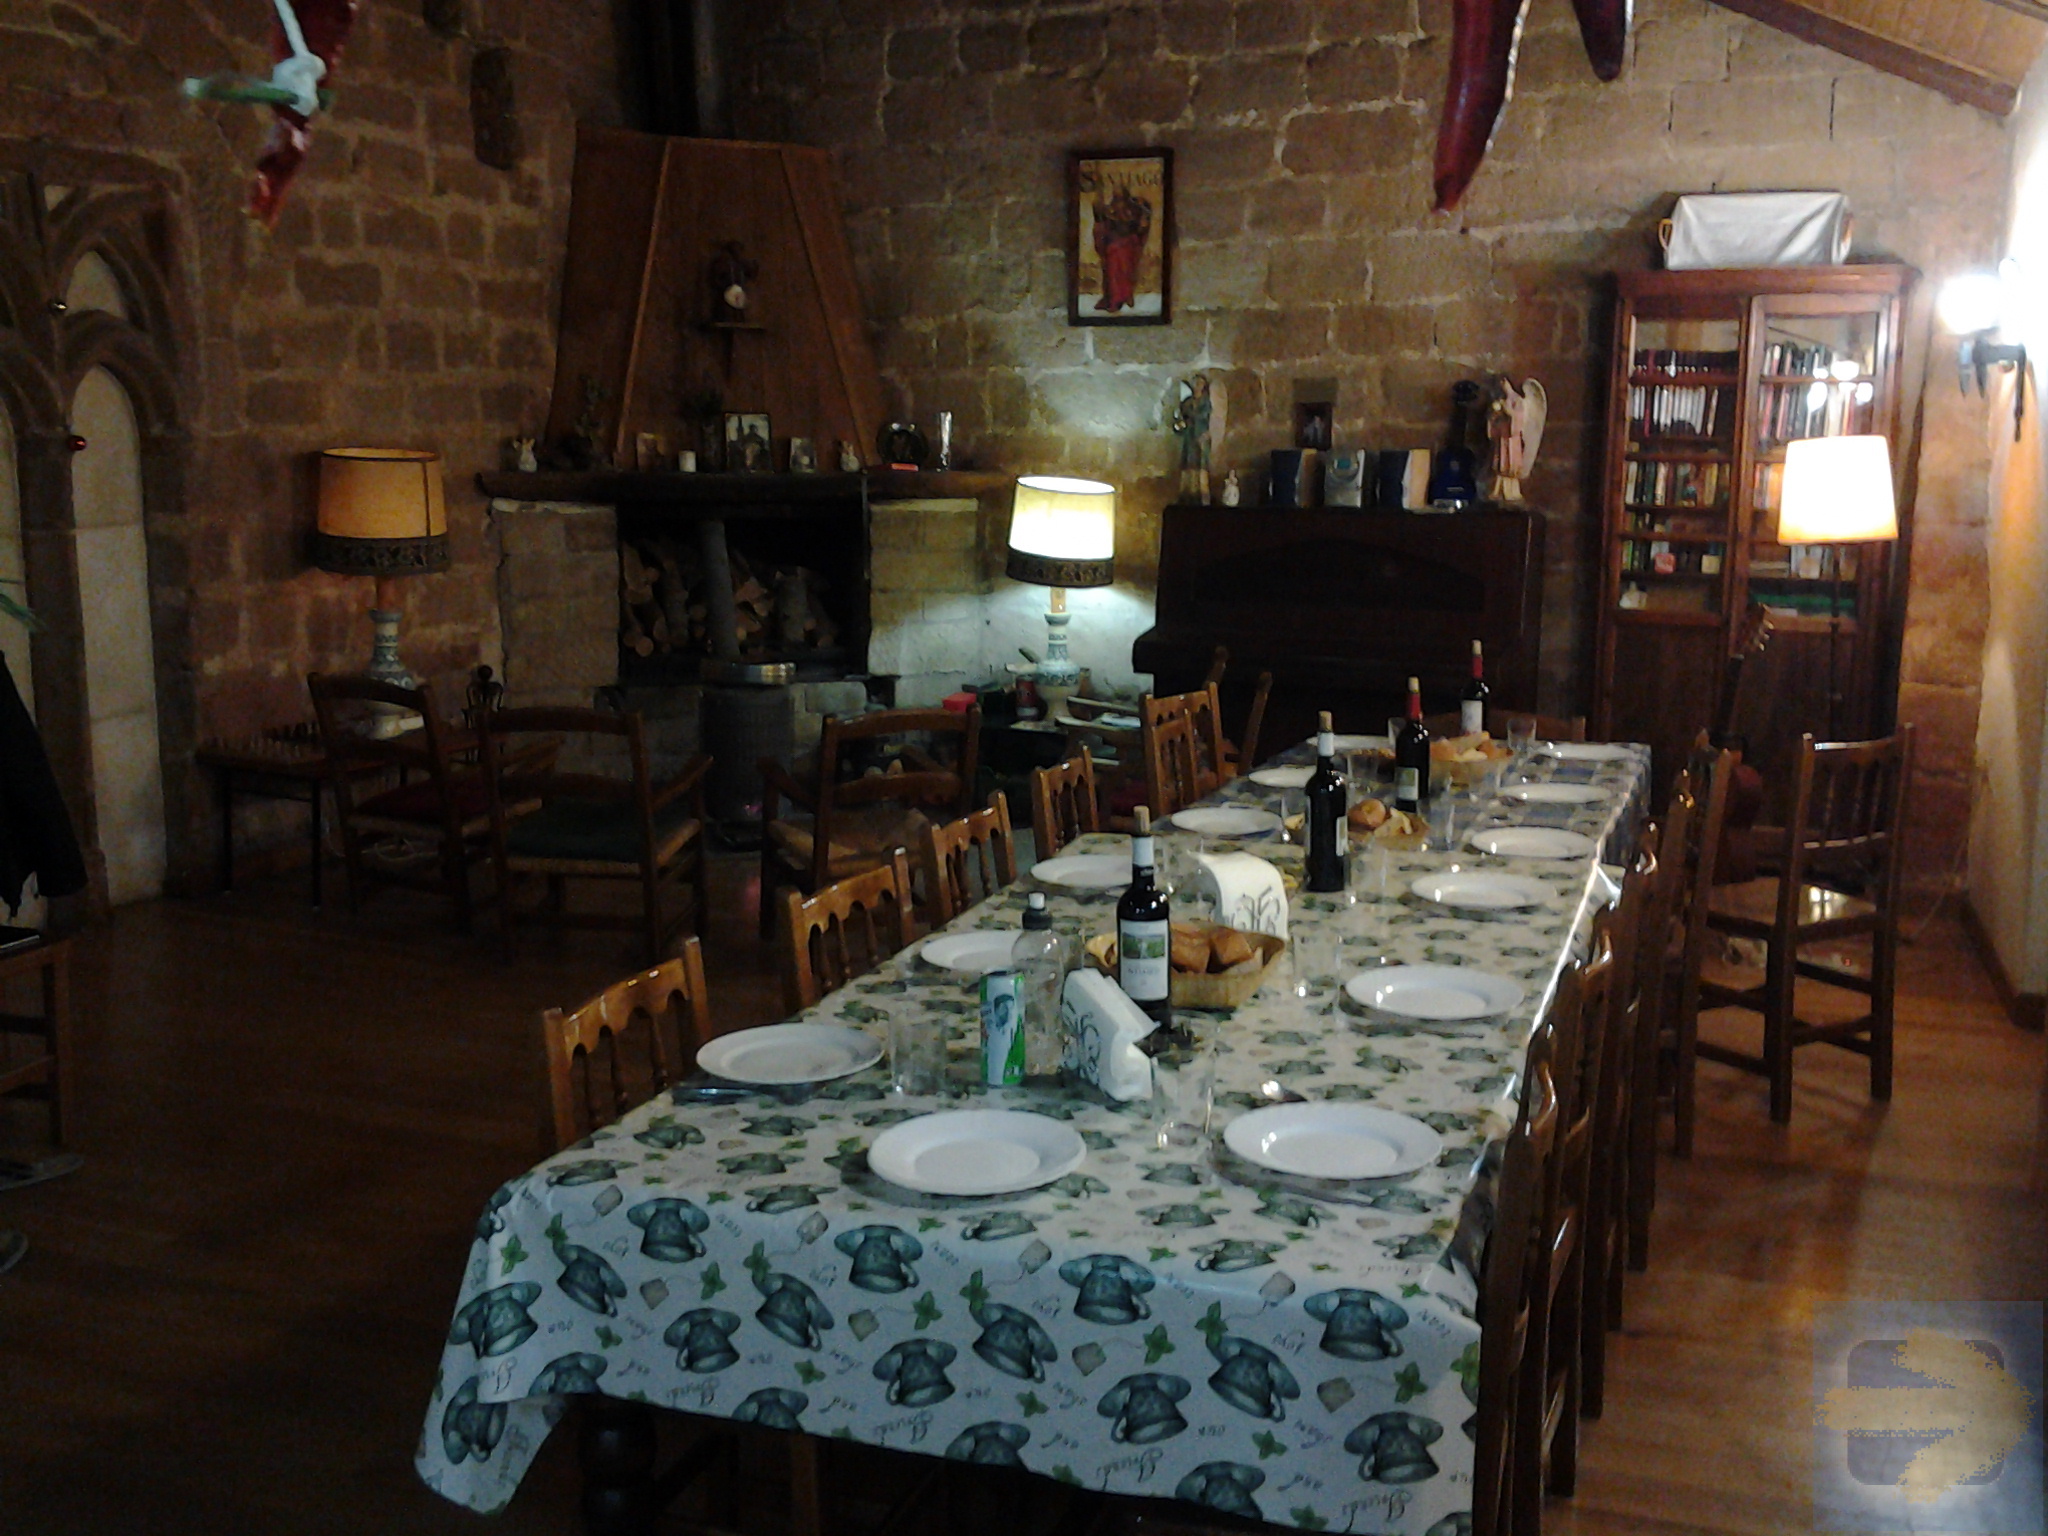 Granon Christmas Eve Dinner Table Set for a Feast for 10 Pilgrims and 1 Hospitalero